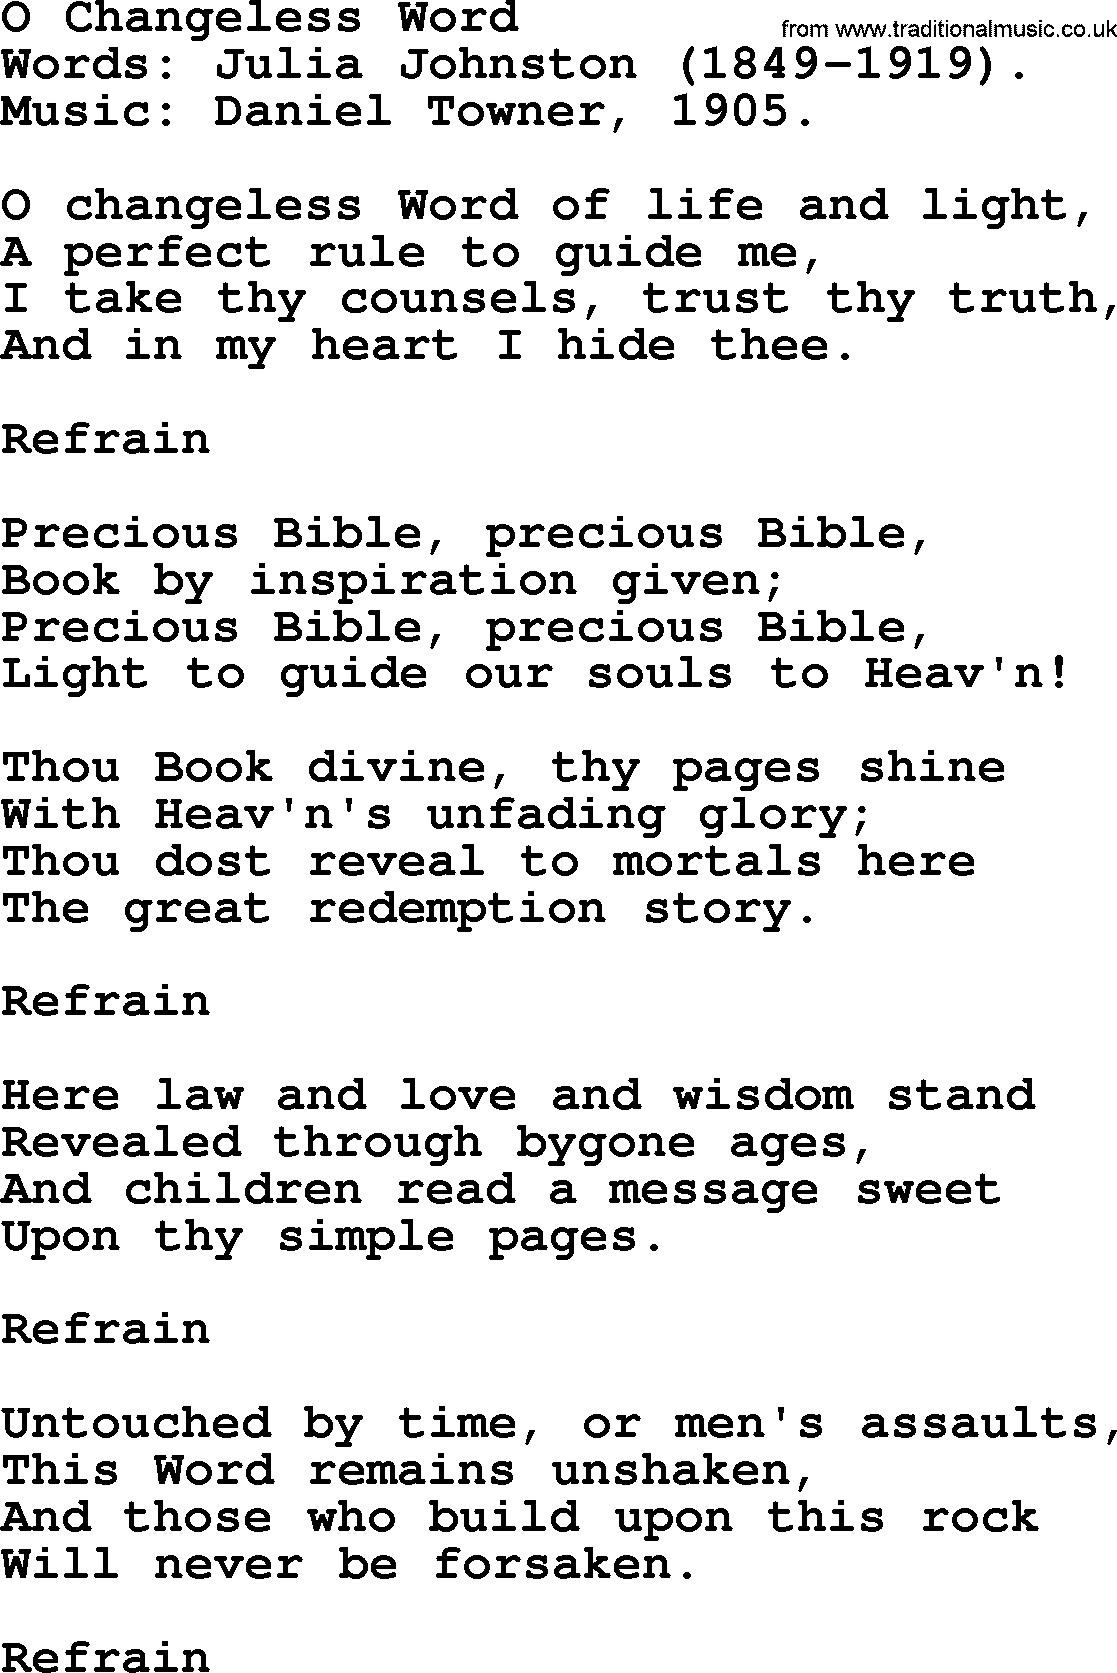 Hymns about Angels, Hymn: O Changeless Word.txt lyrics with PDF